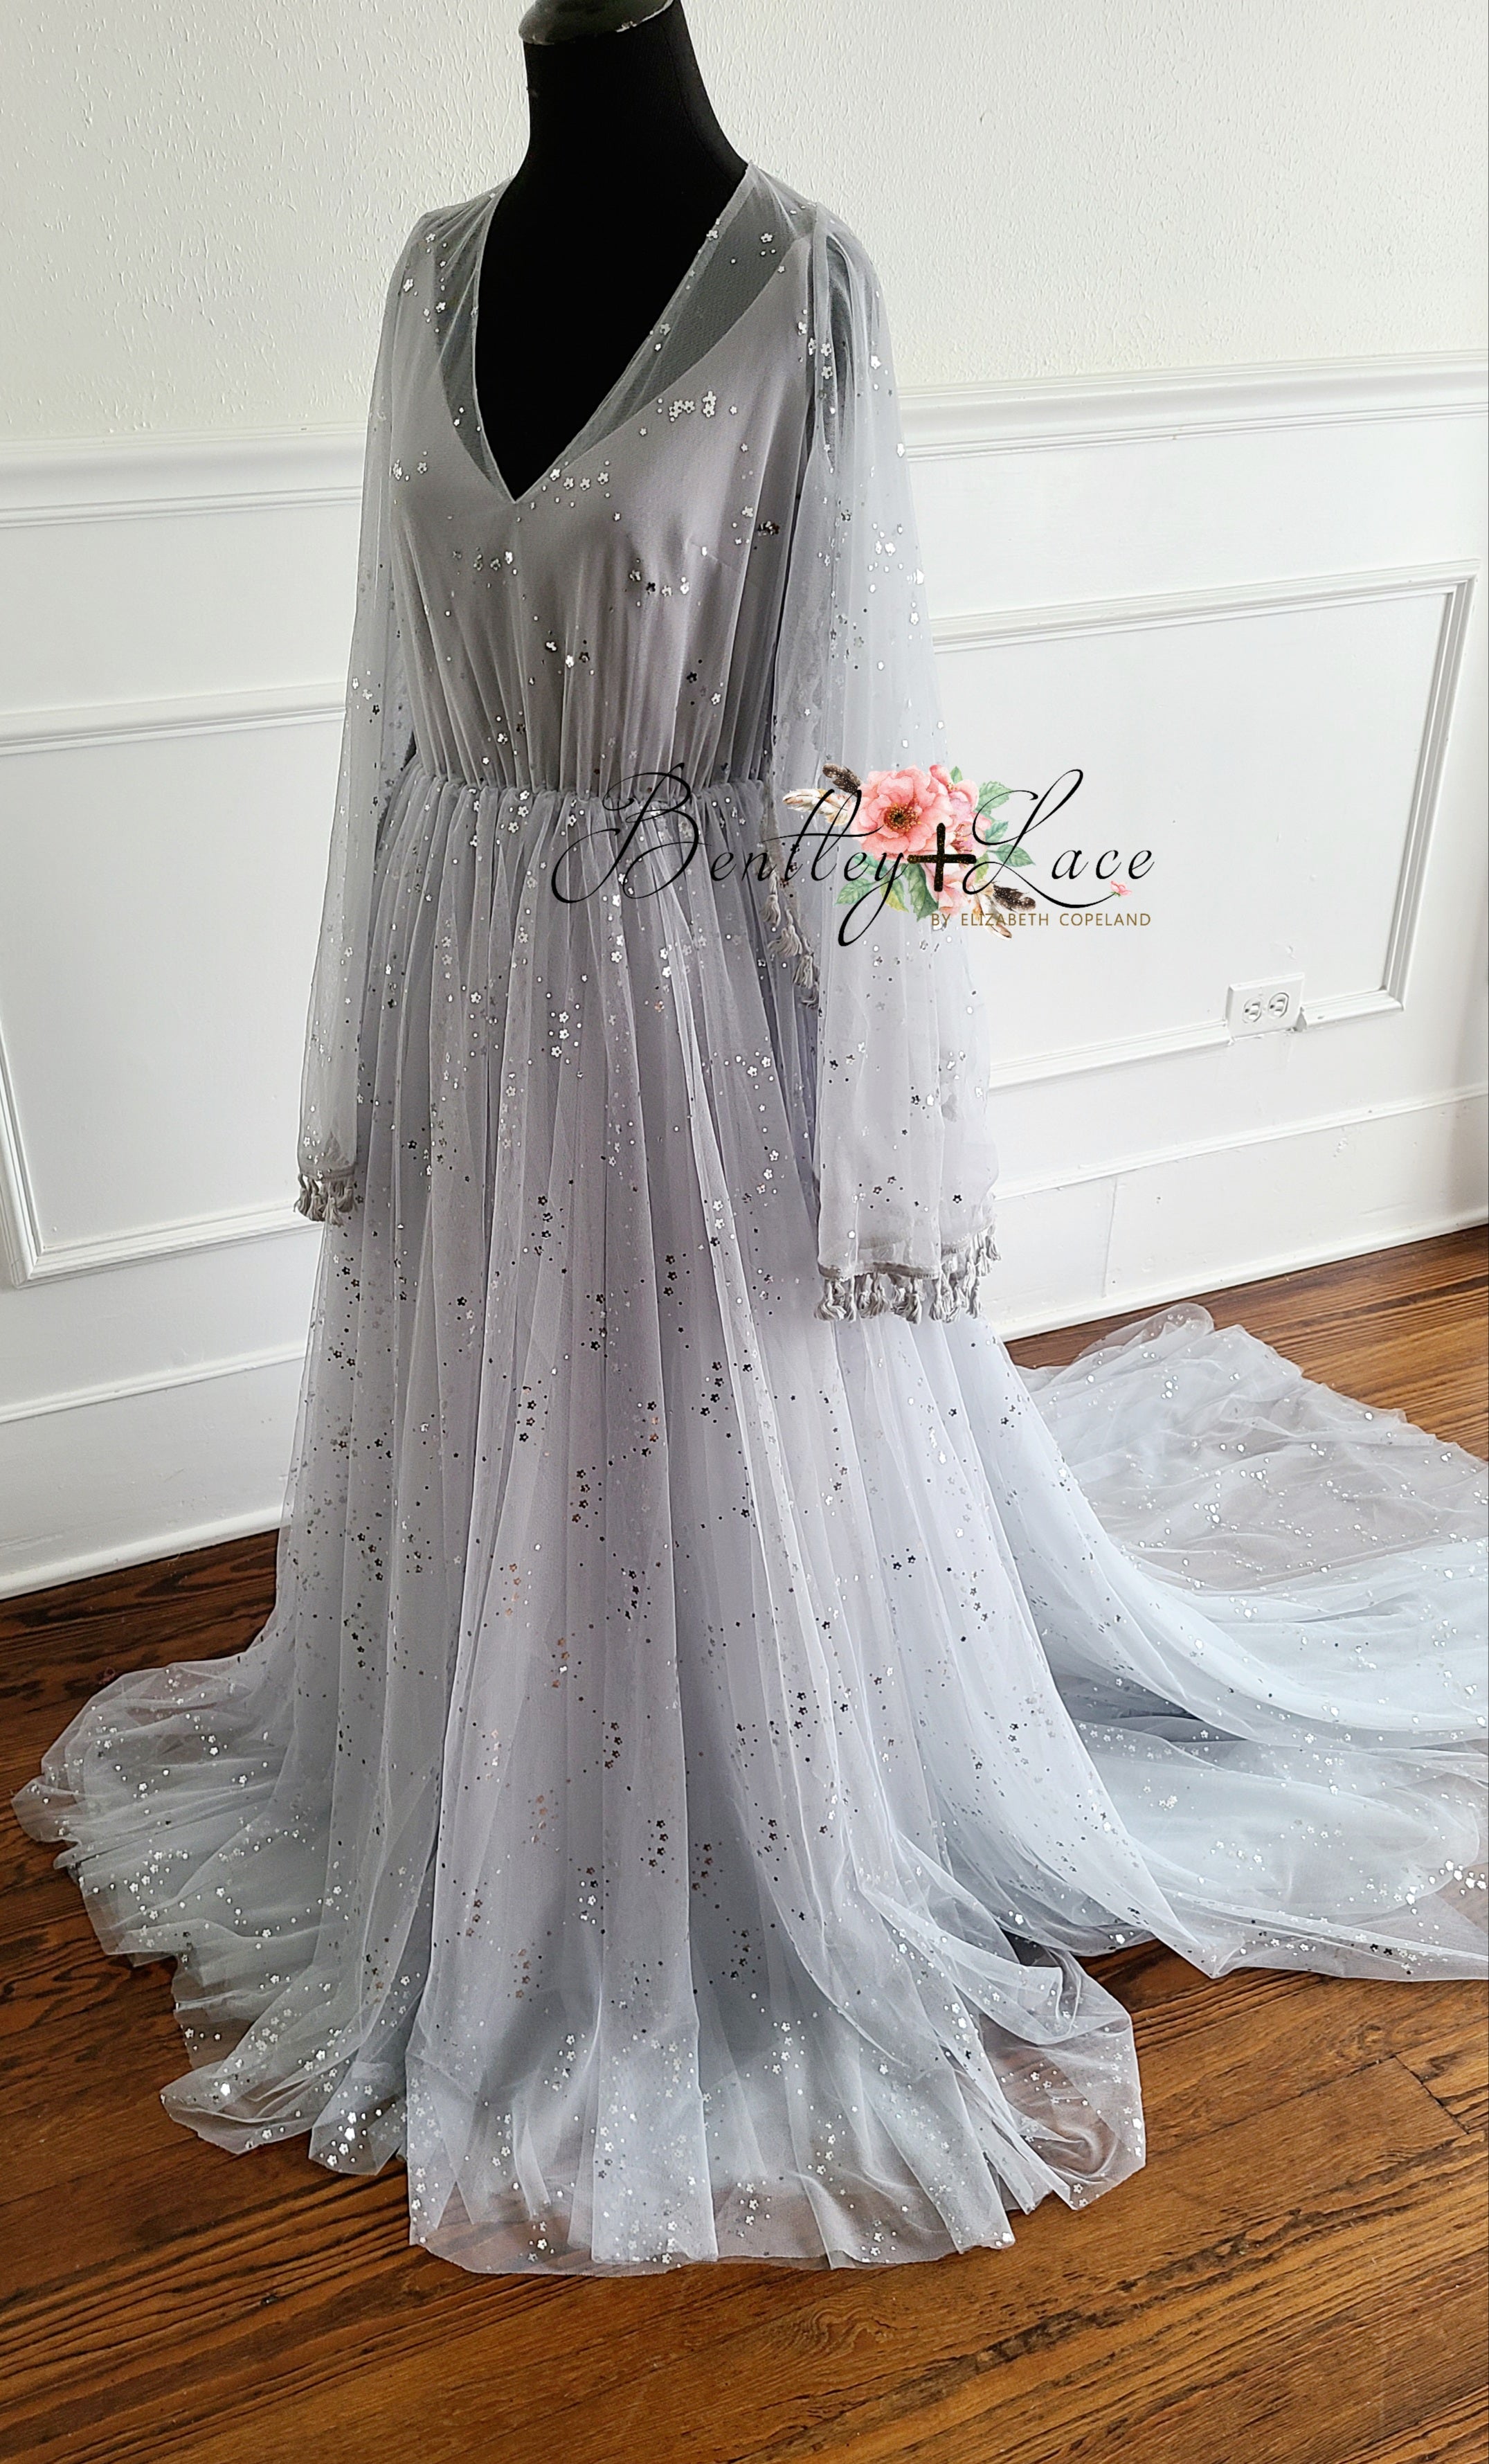 Hope -Beautiful boho inspired gown - (TEEN-ADULT) retired rental no slip